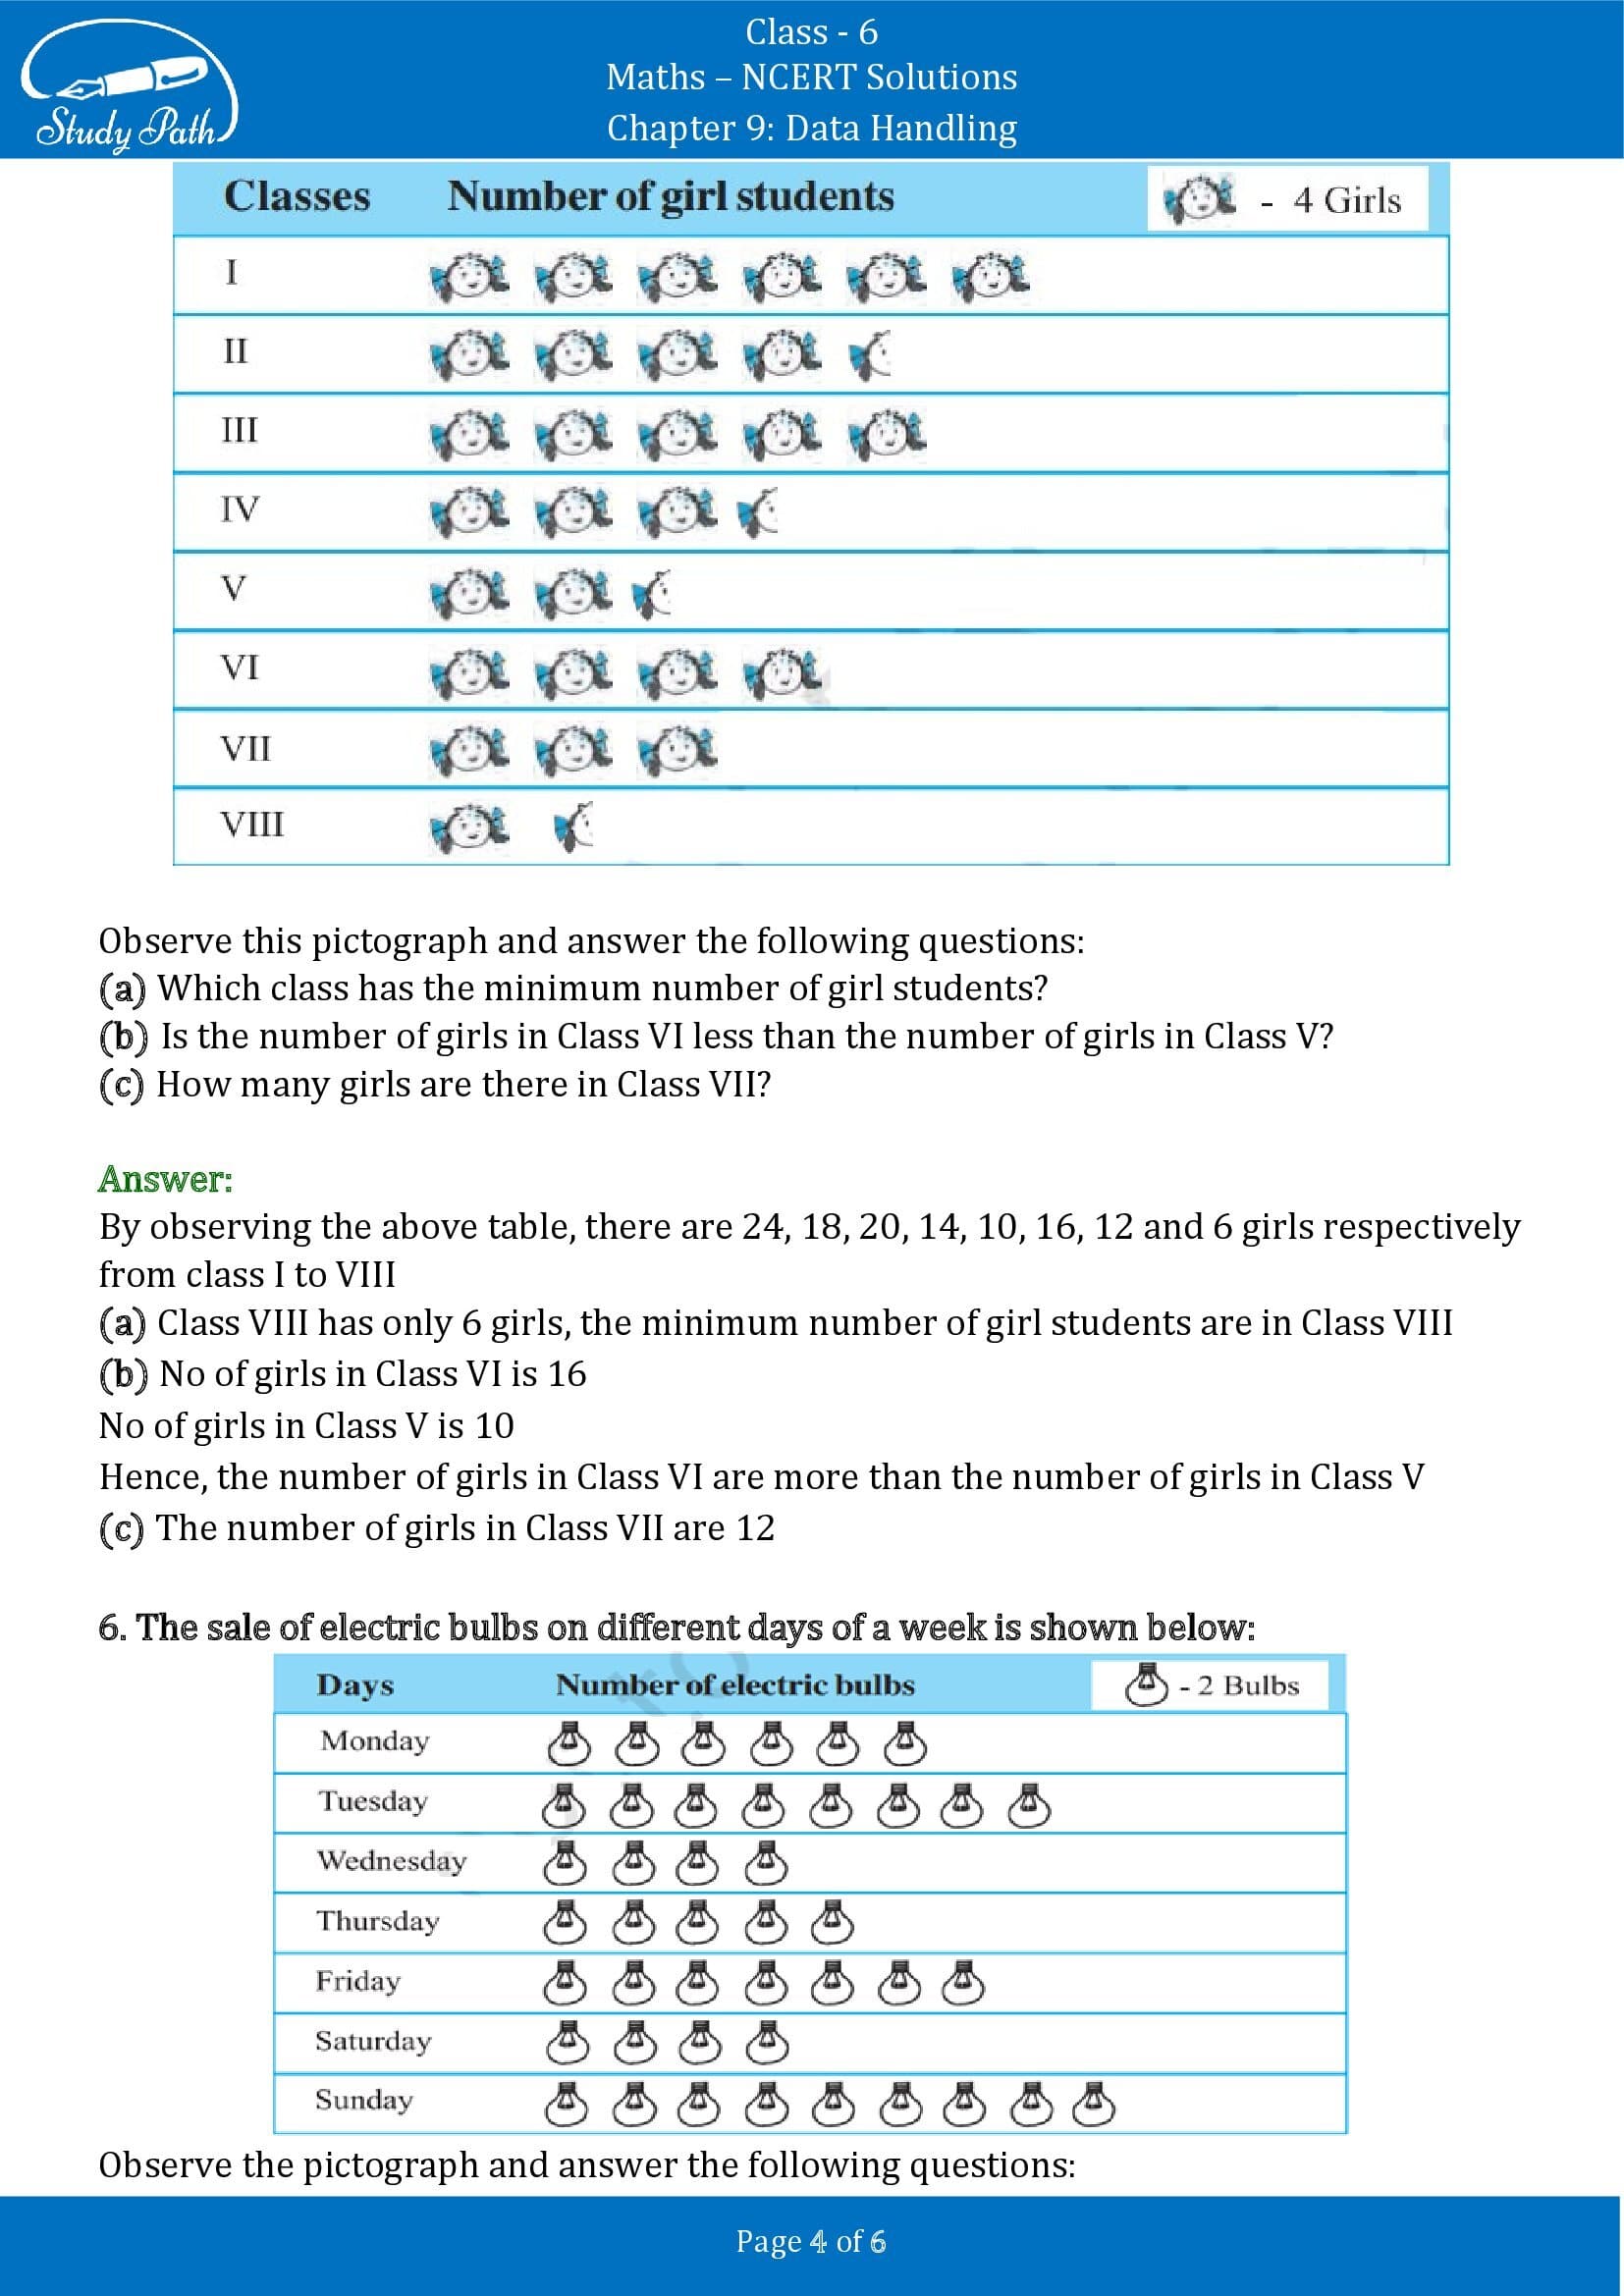 NCERT Solutions for Class 6 Maths Chapter 9 Data Handling Exercise 9.1 00004